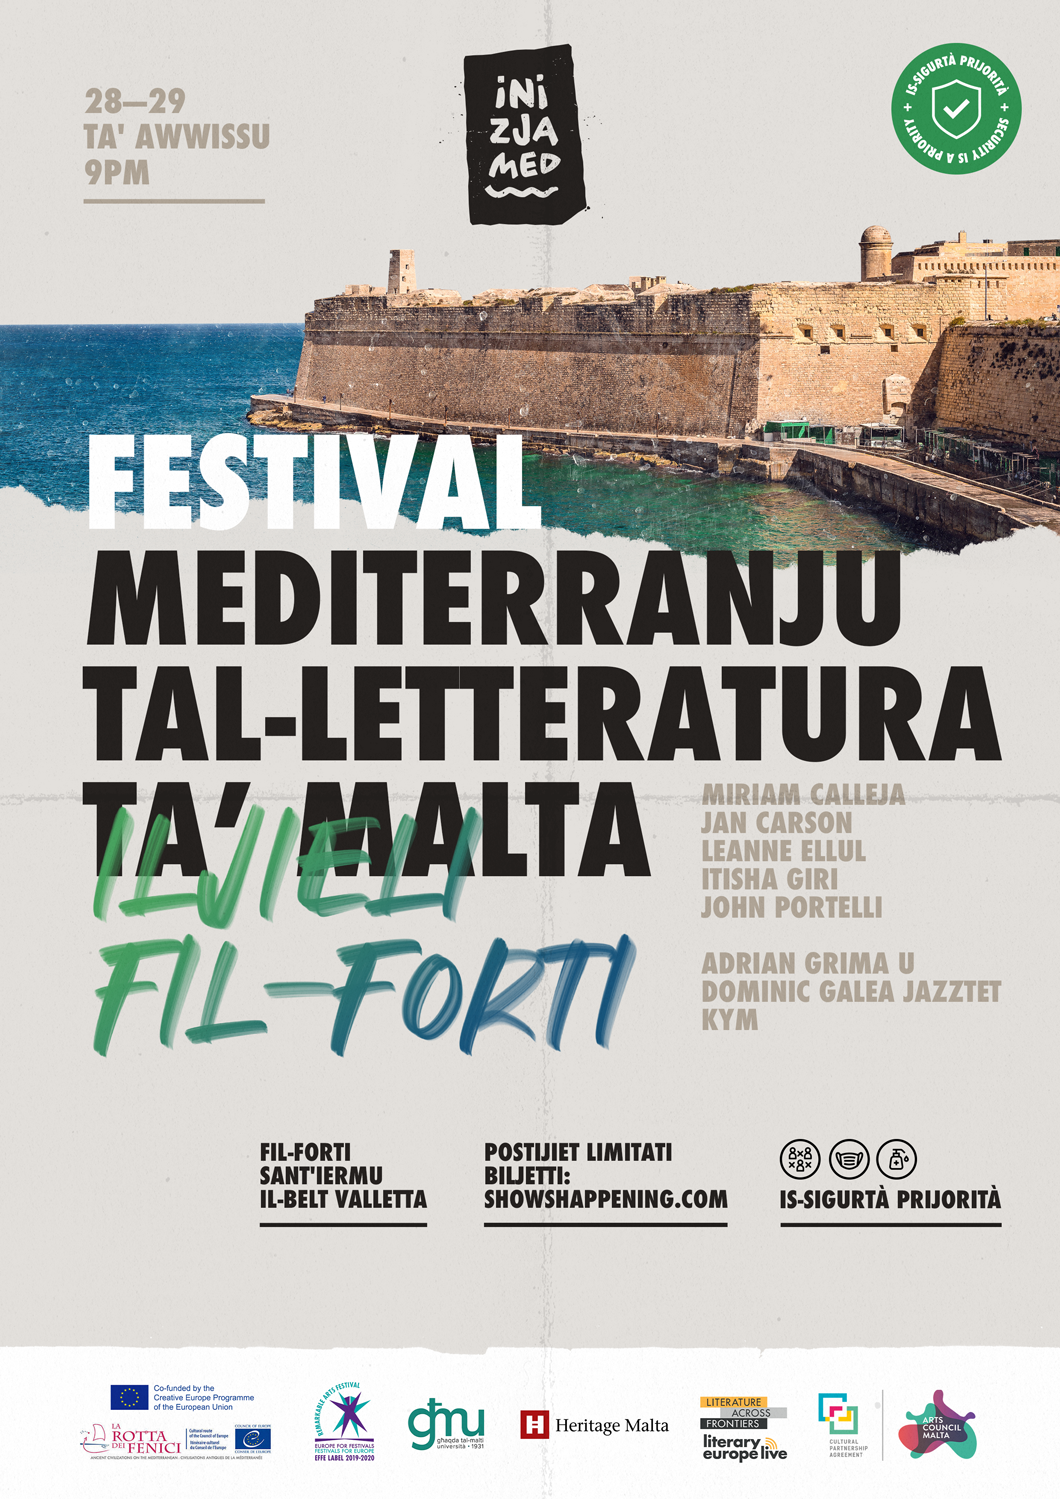 Festival Mediterranju tal-Letteratura 2020 poster